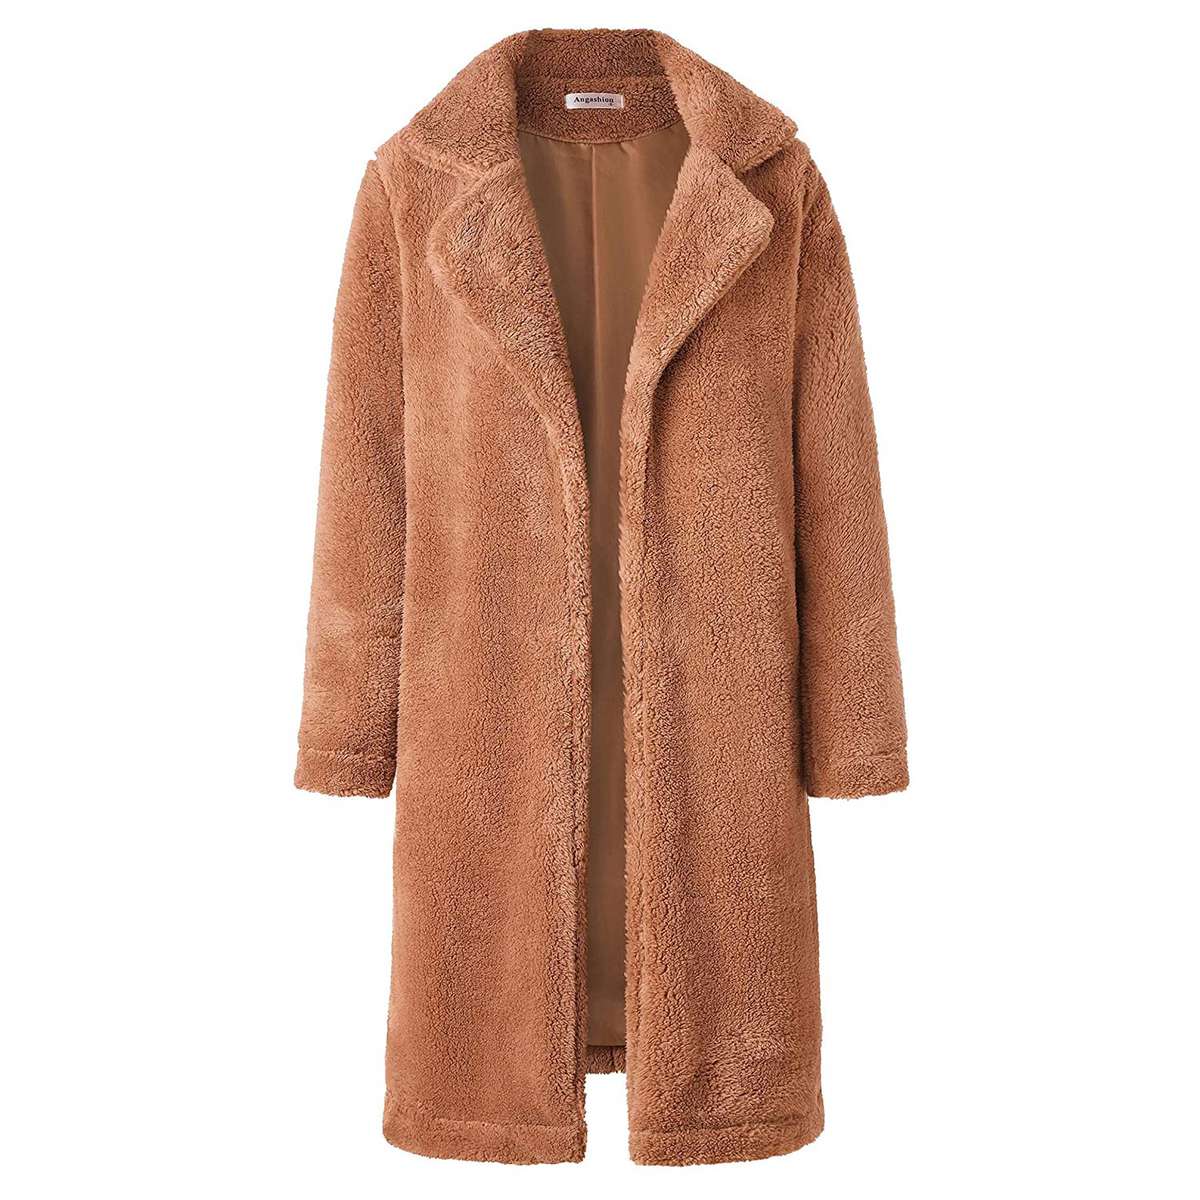 Angashion Women's Fuzzy Fleece Lapel Open Front Long Cardigan Coat Faux Fur